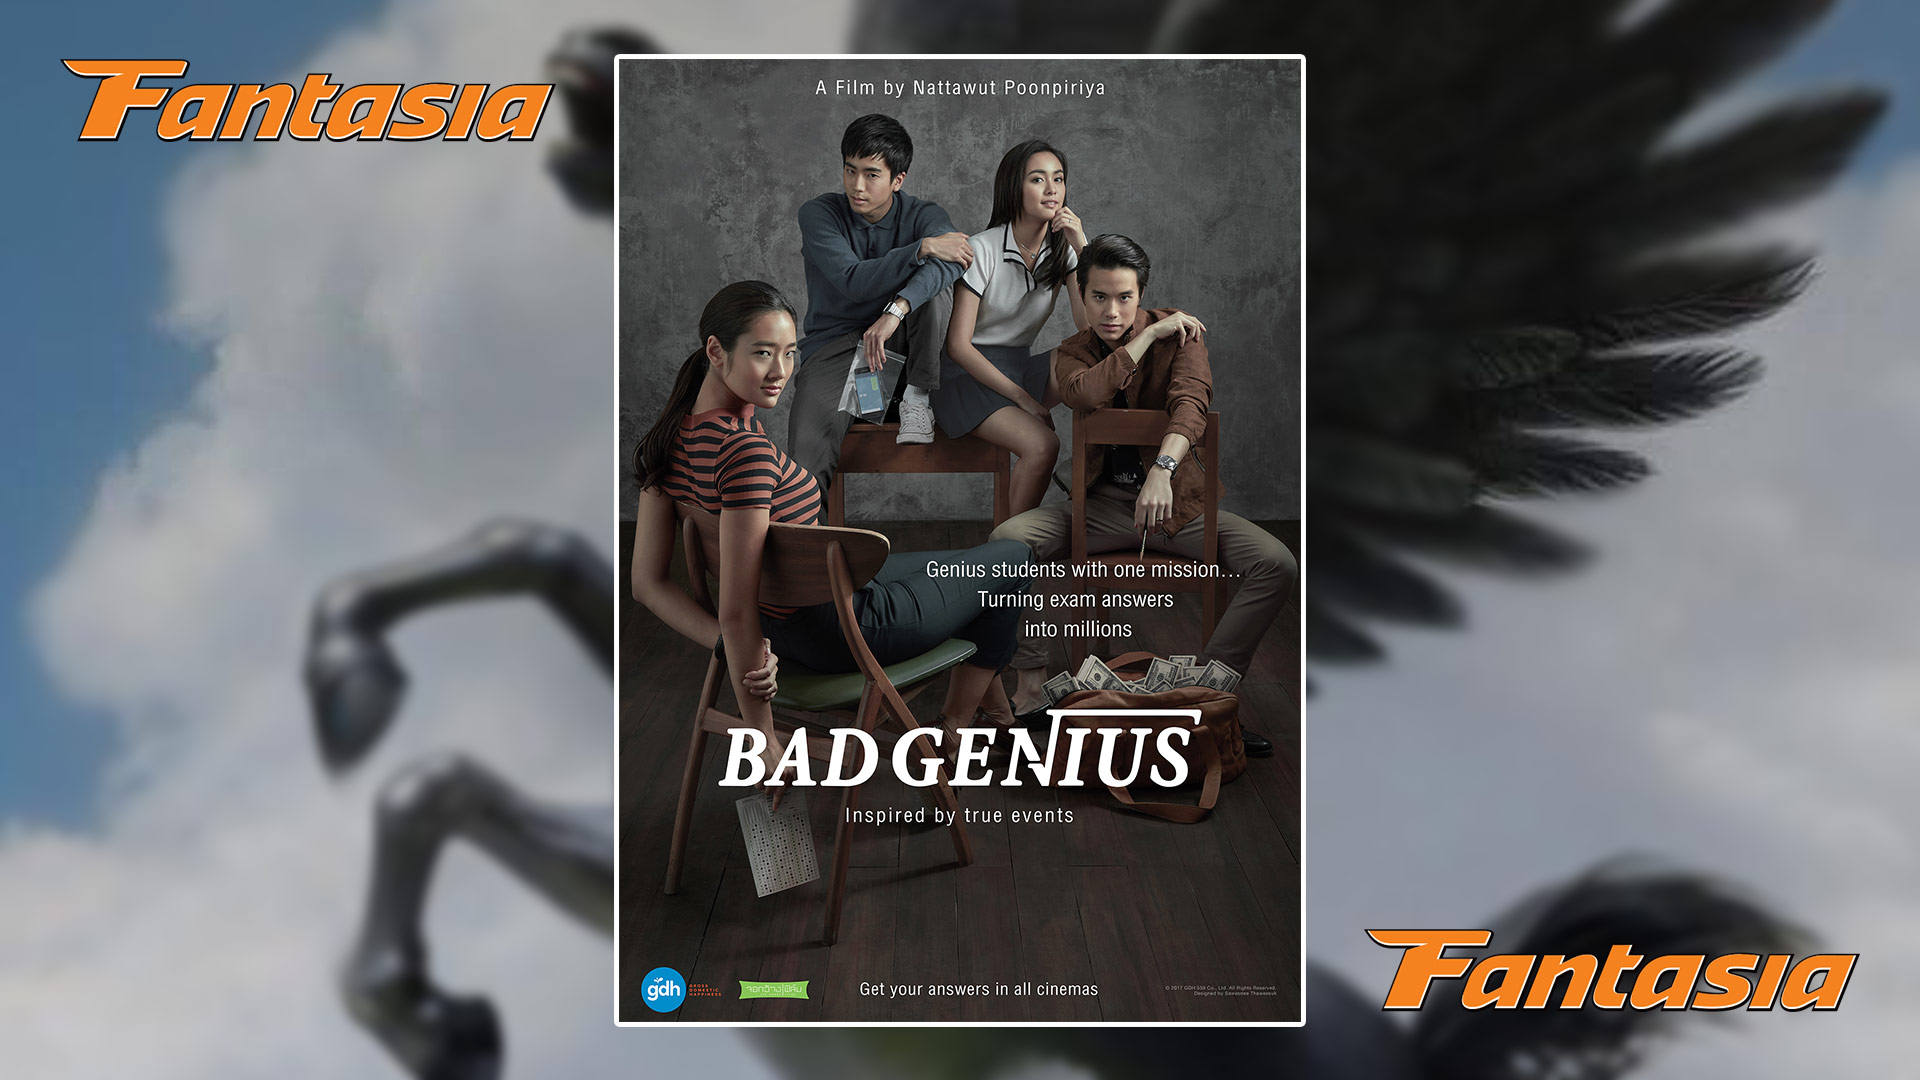 [Fantasia 2017] Bad Genius de Nattawut Poonpiriya – Critique du film